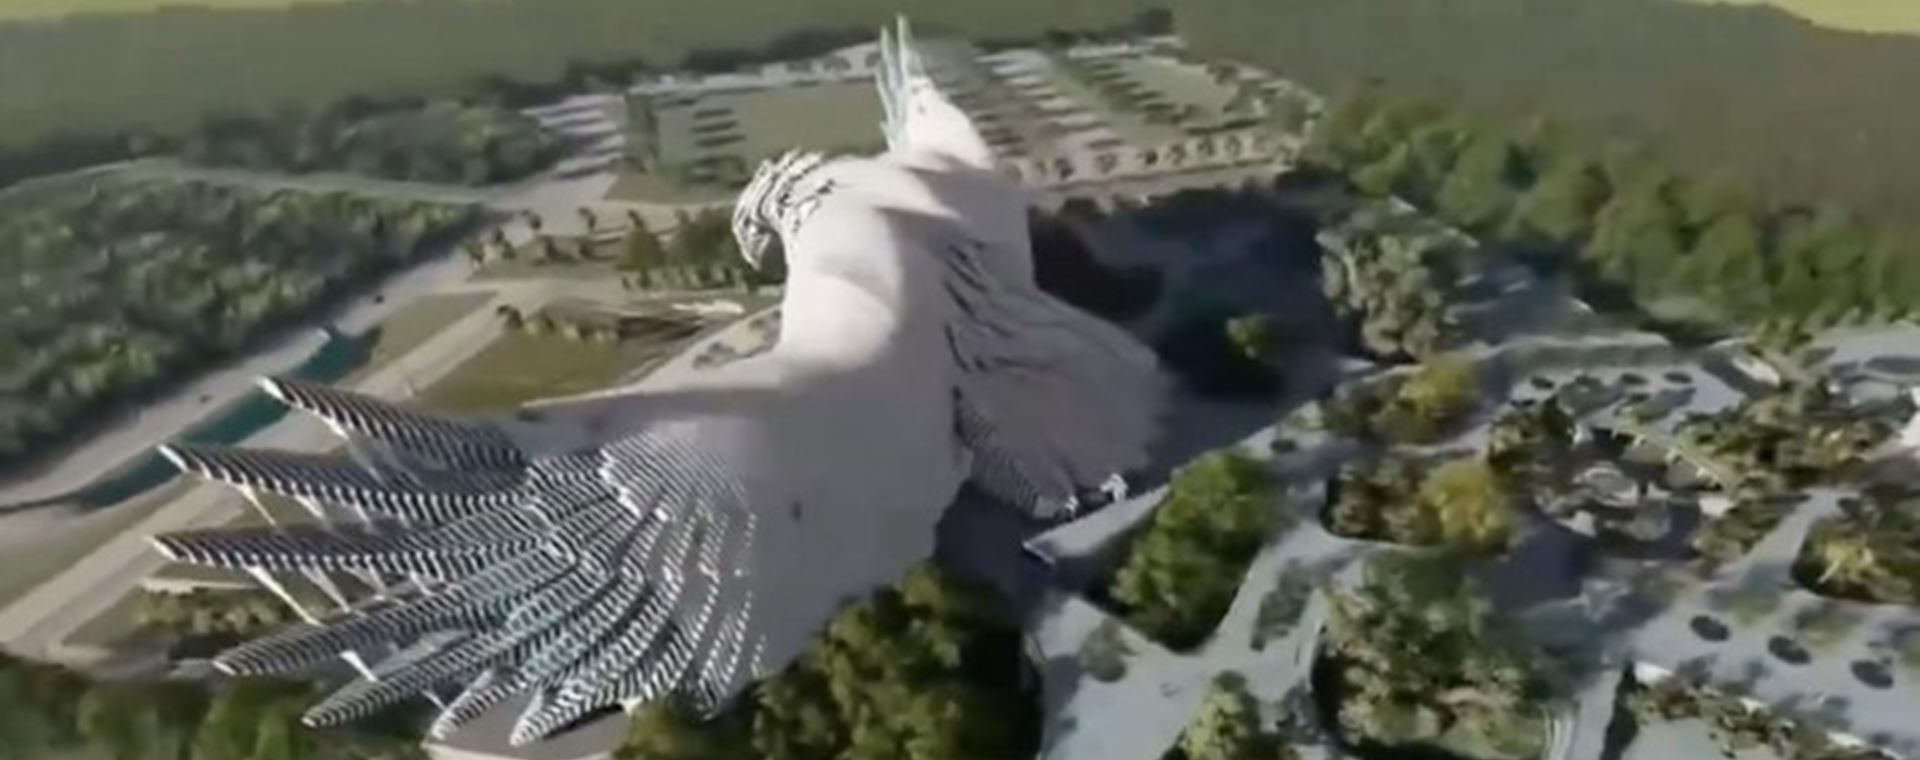 Desain Burung Garuda di Istana Kepresidenan di IKN baru. - Istimewa